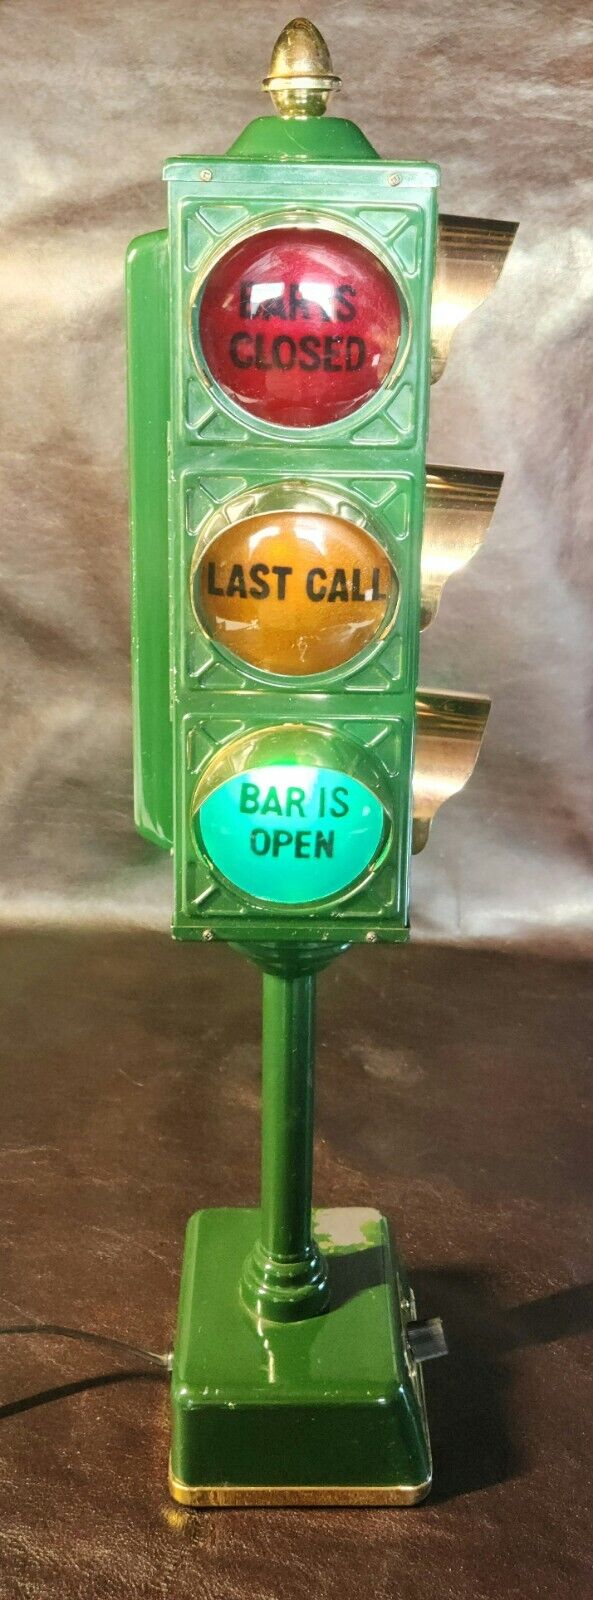 1960s B&B Bar Traffic Signal, Japan, Last Call/Bar Is Closed/Open, Tested/READ